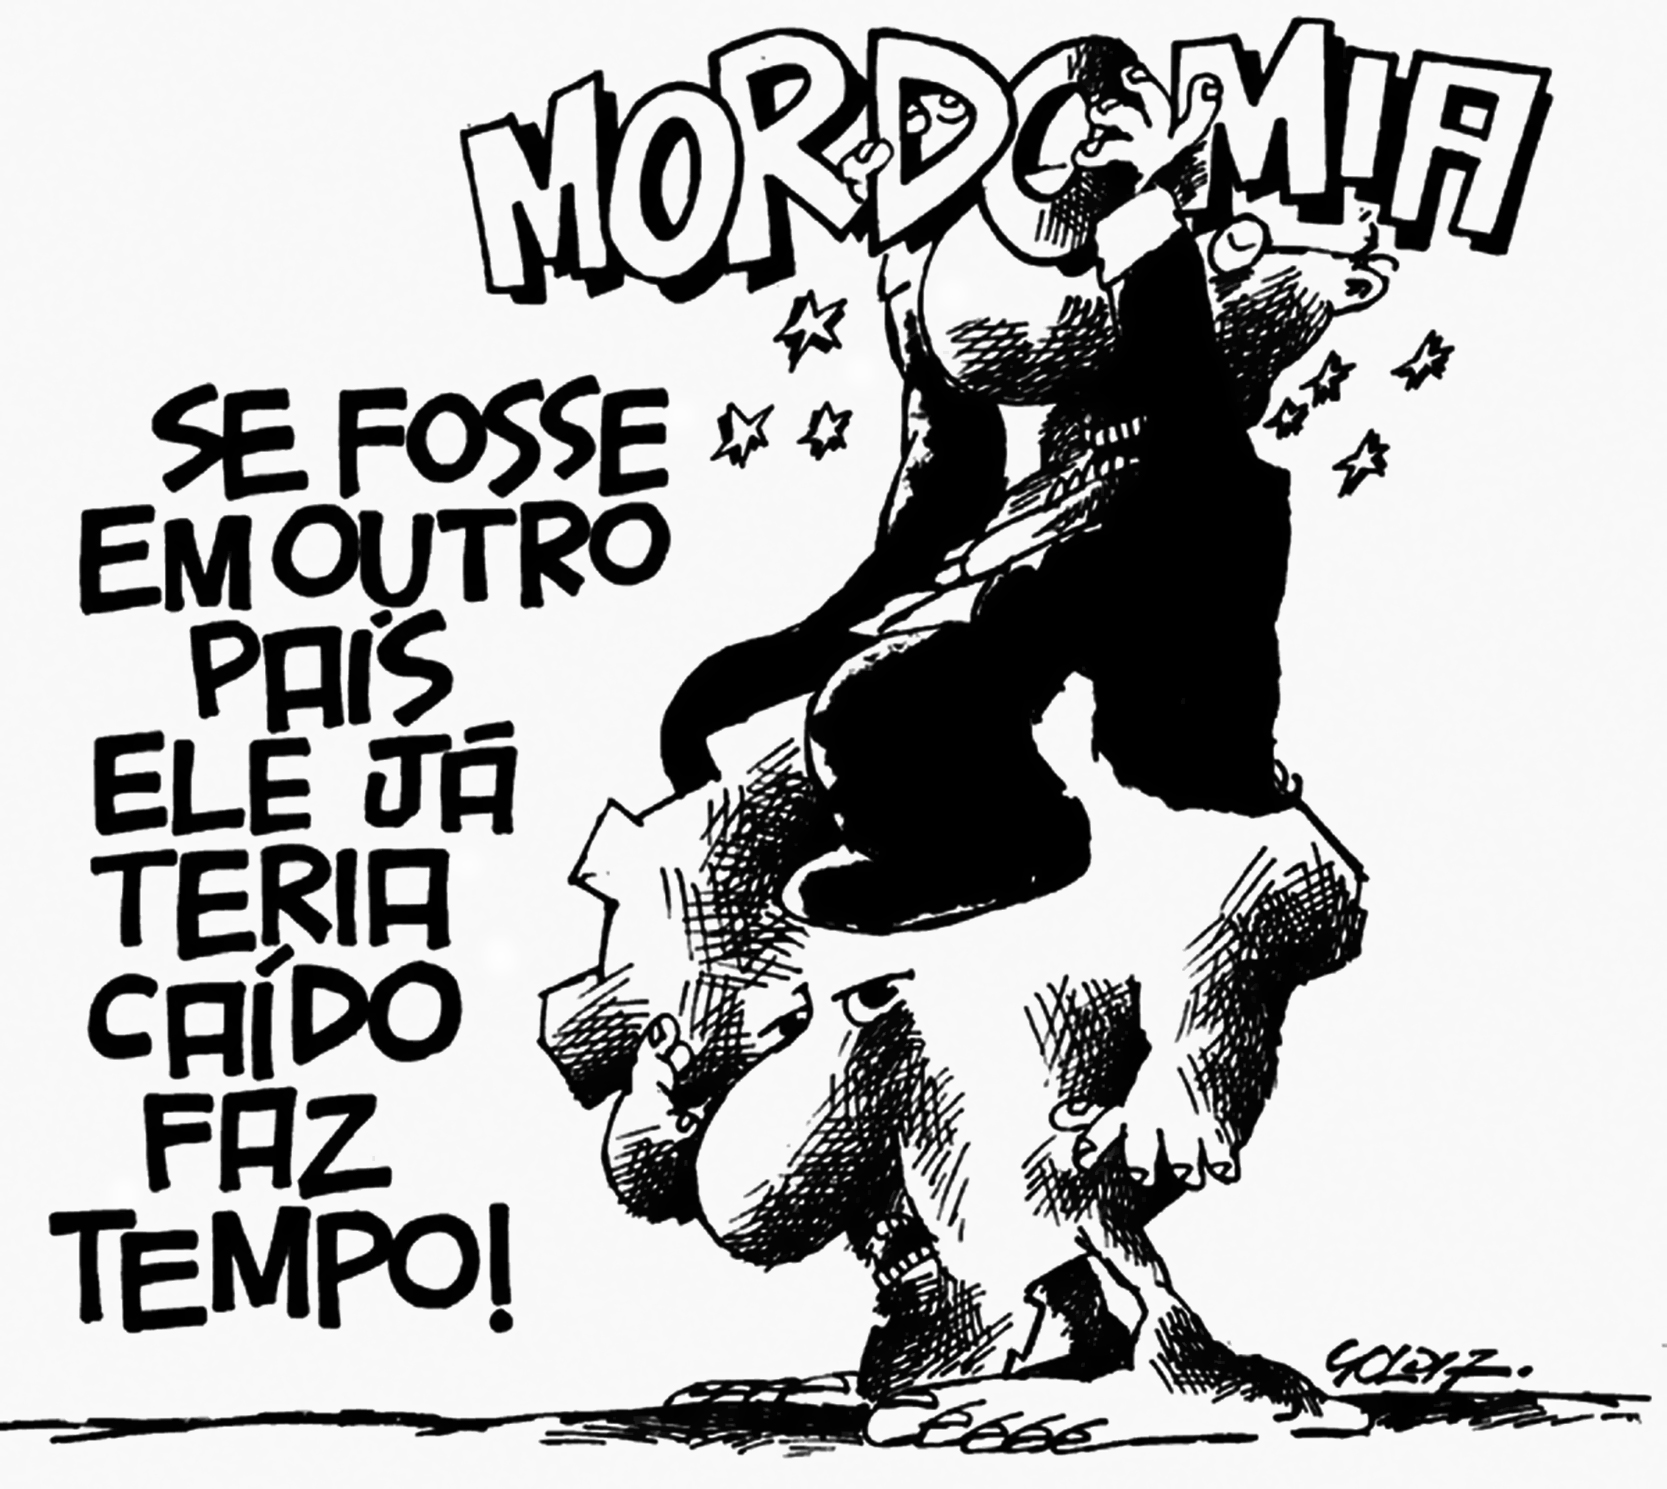 mordomia